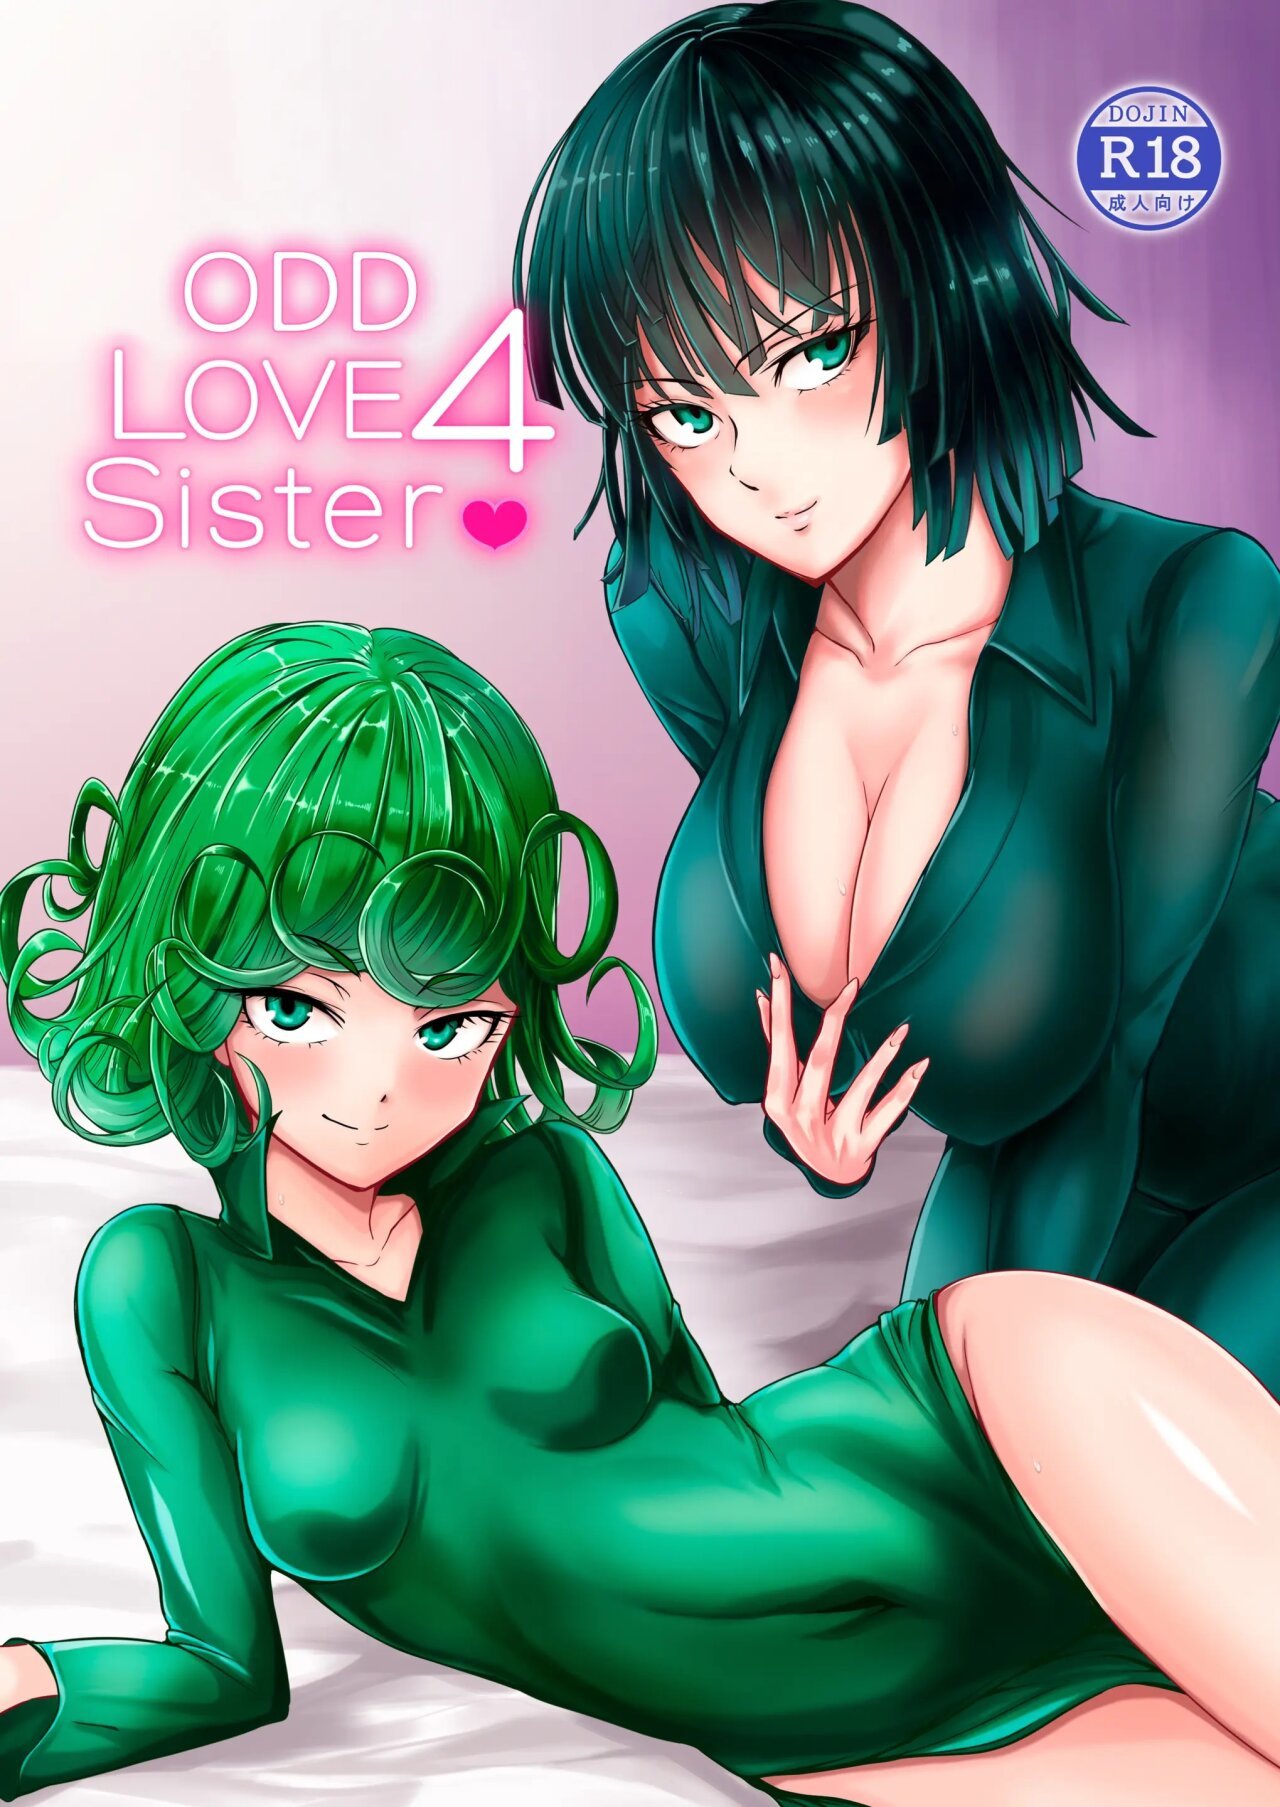 Dekoboko Love sister 4-gekime Odd Love sister 4-gekime - 0